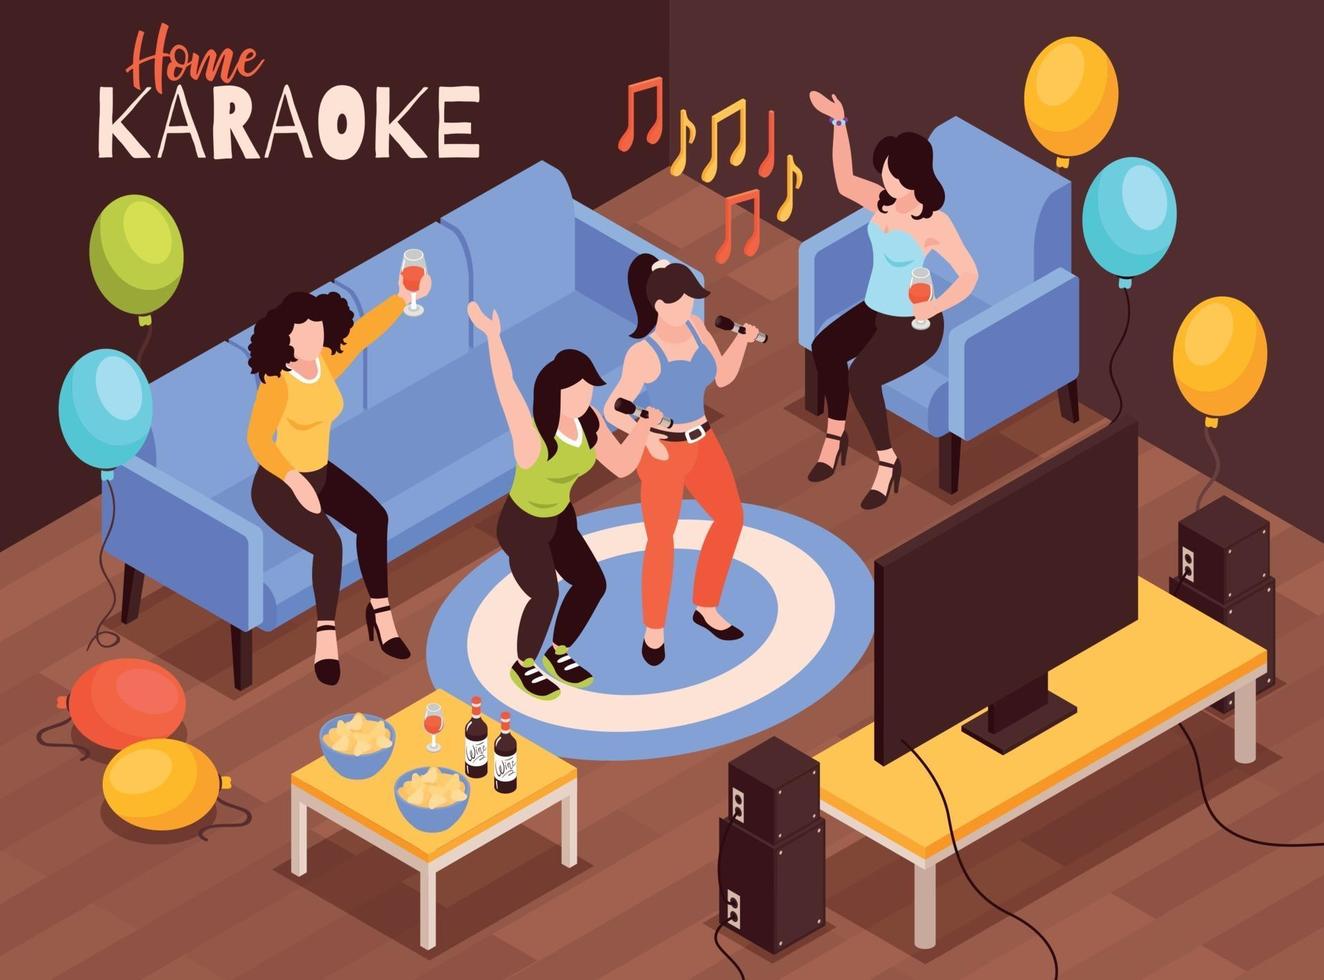 karaoke hemma komposition vektor